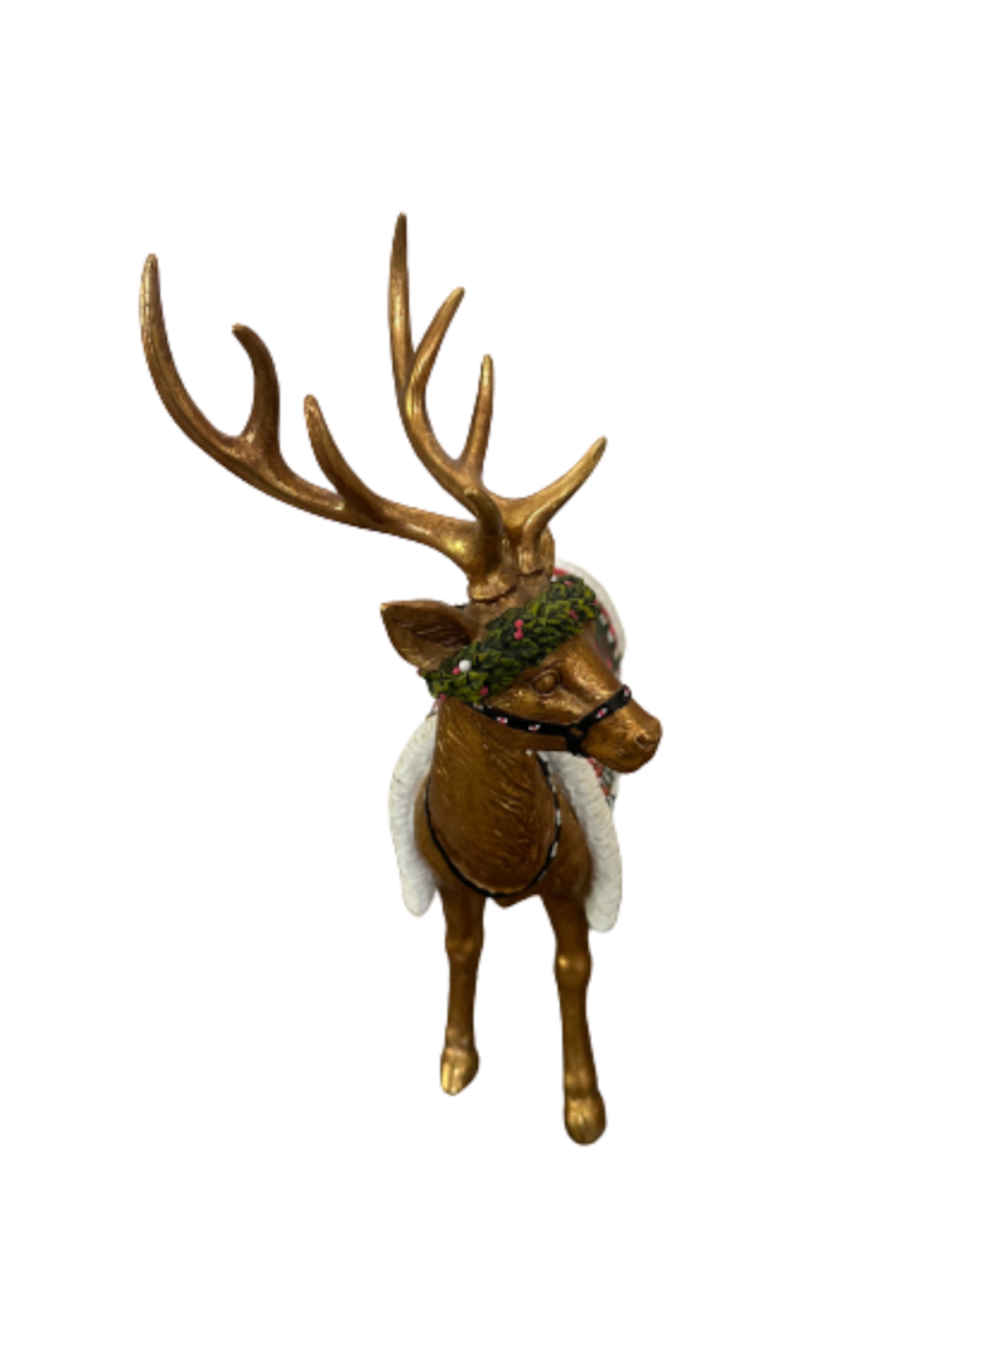 MacKenzie-Childs Christmas Aberdeen Reindeer Standing Figurine New with Box